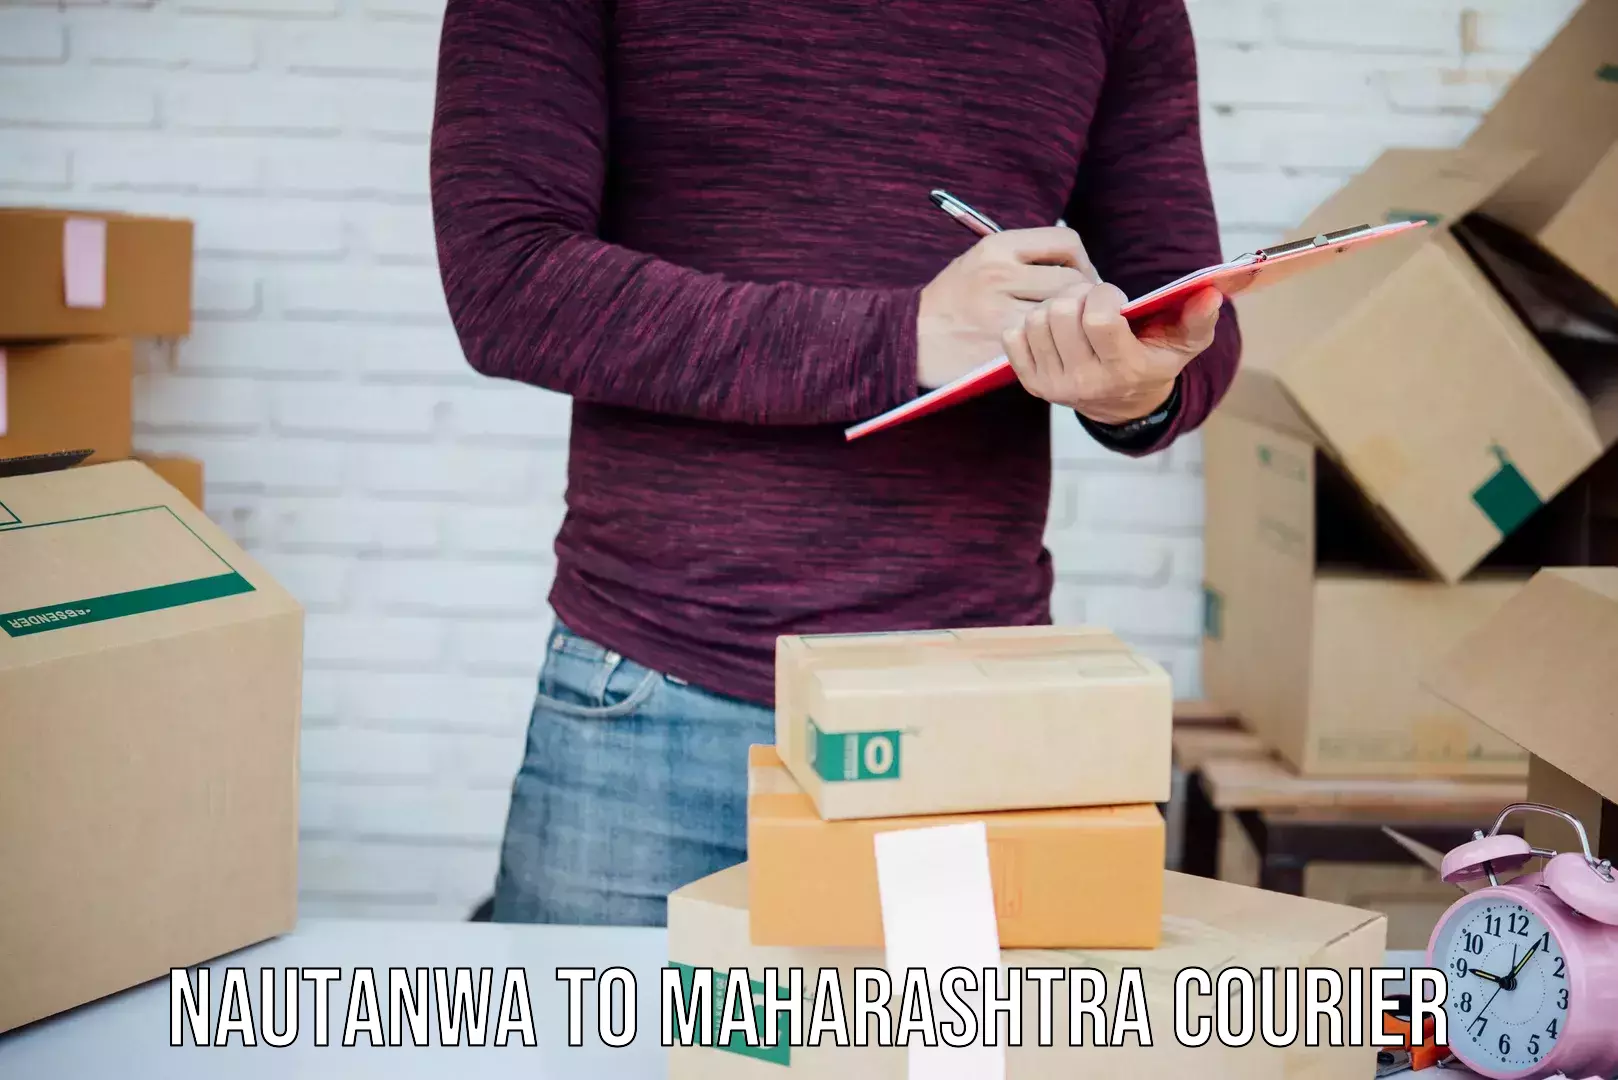 Personalized courier experiences Nautanwa to Maharashtra